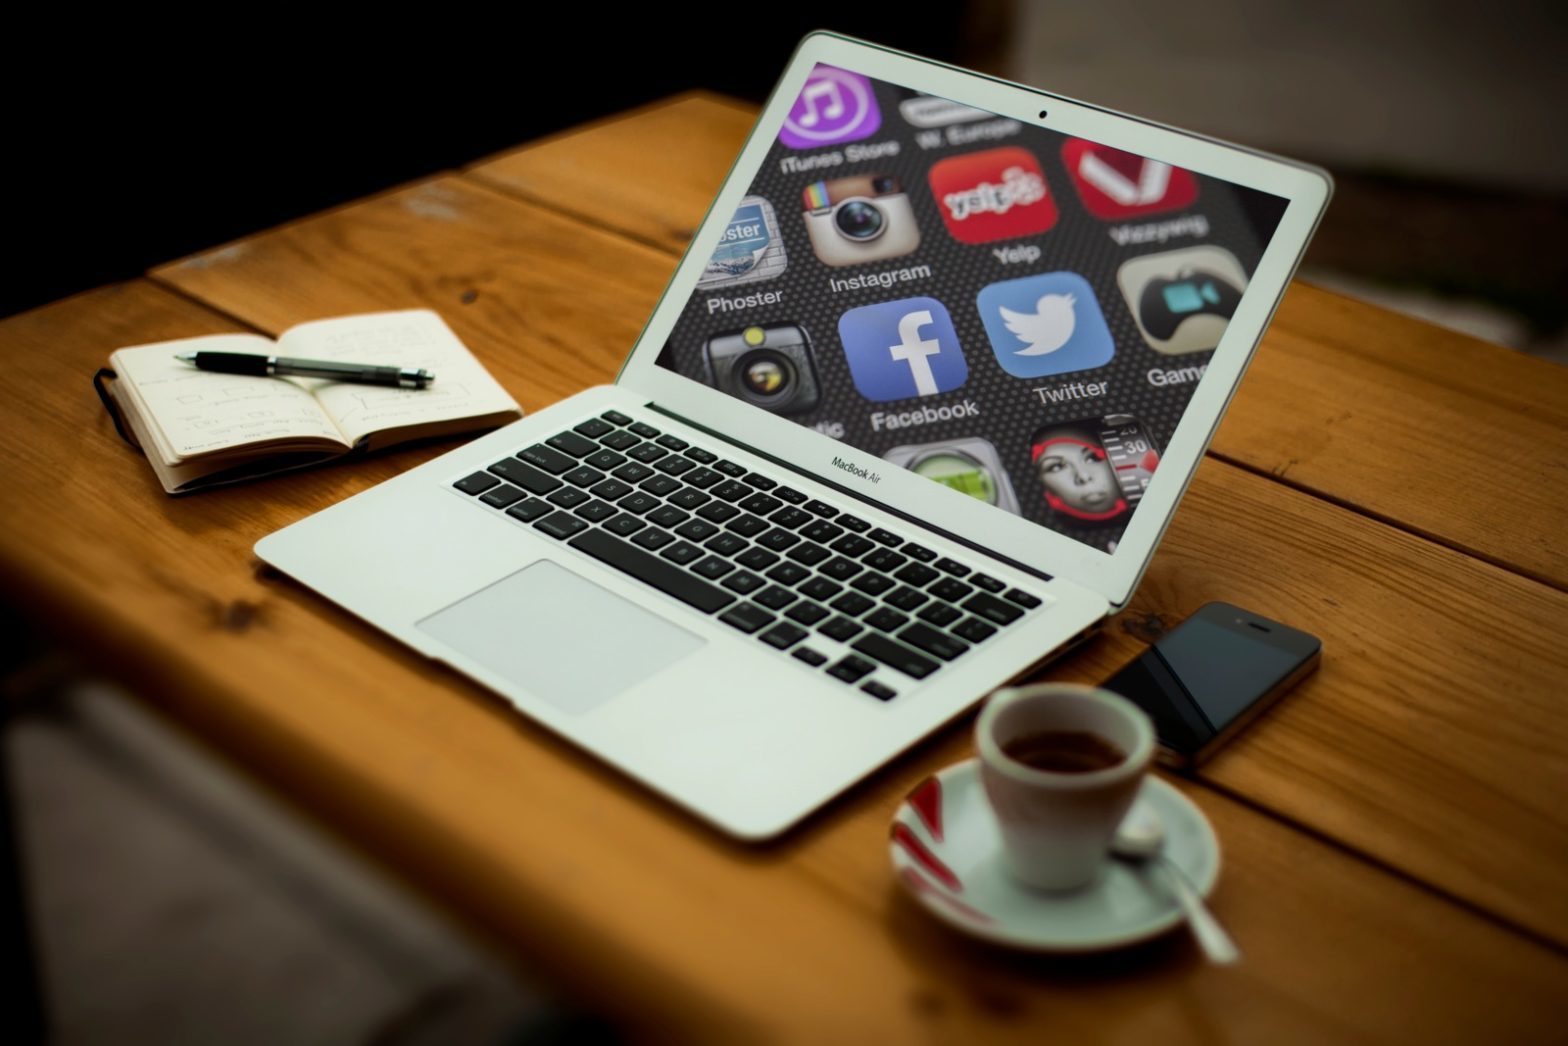 Social media platform icons shown on a laptop screen